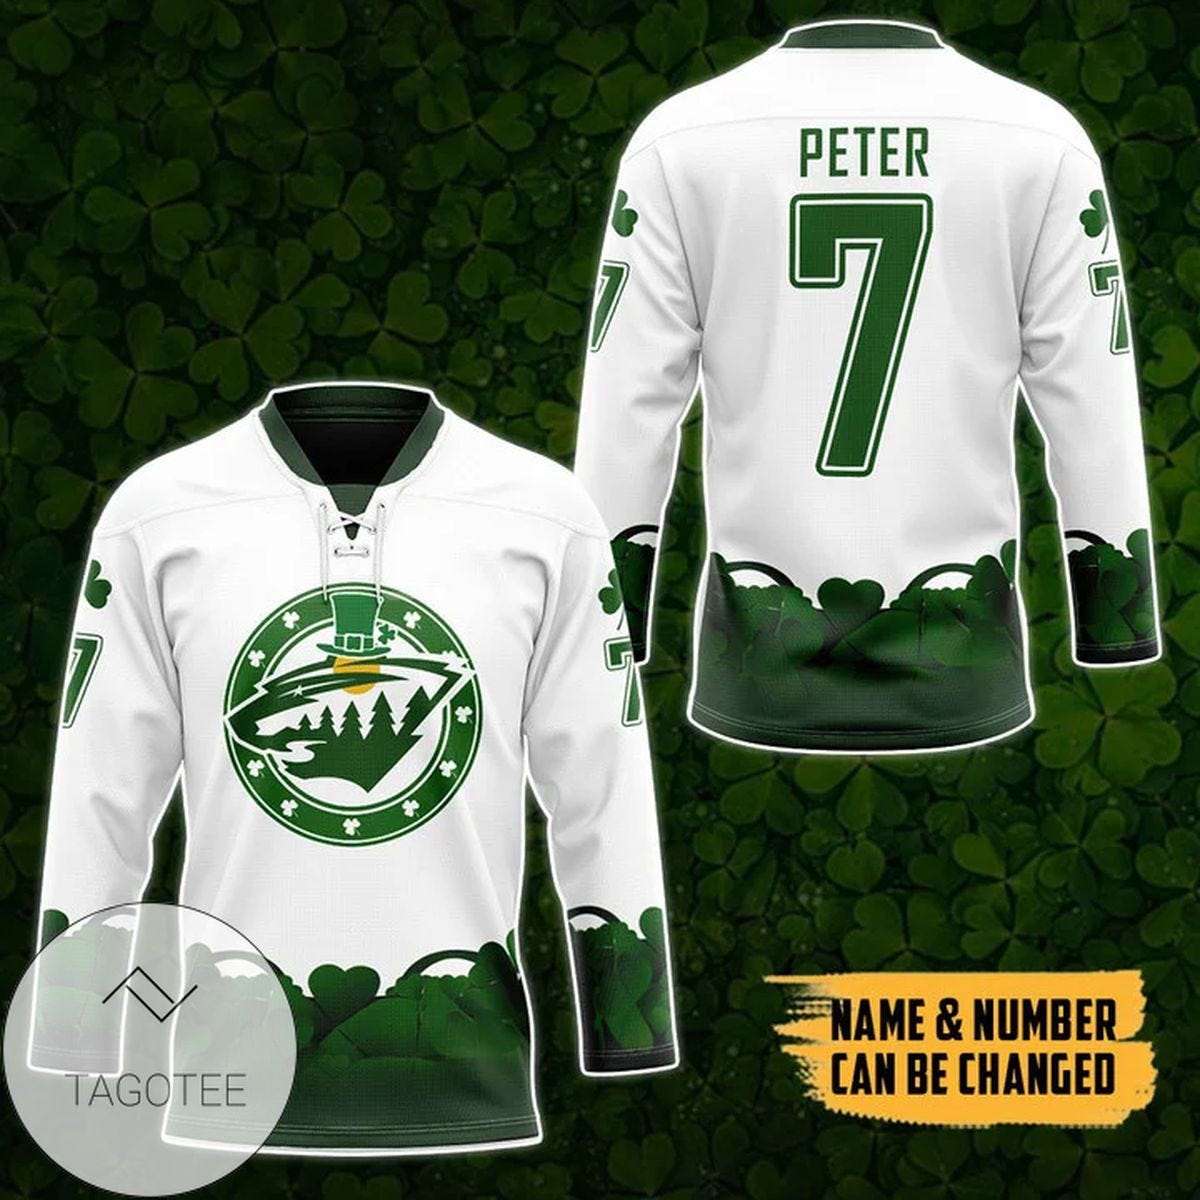 Minnesota Wild Men's Adidas 2020 St. Patrick's Day Custom Stitched NHL Jersey Green